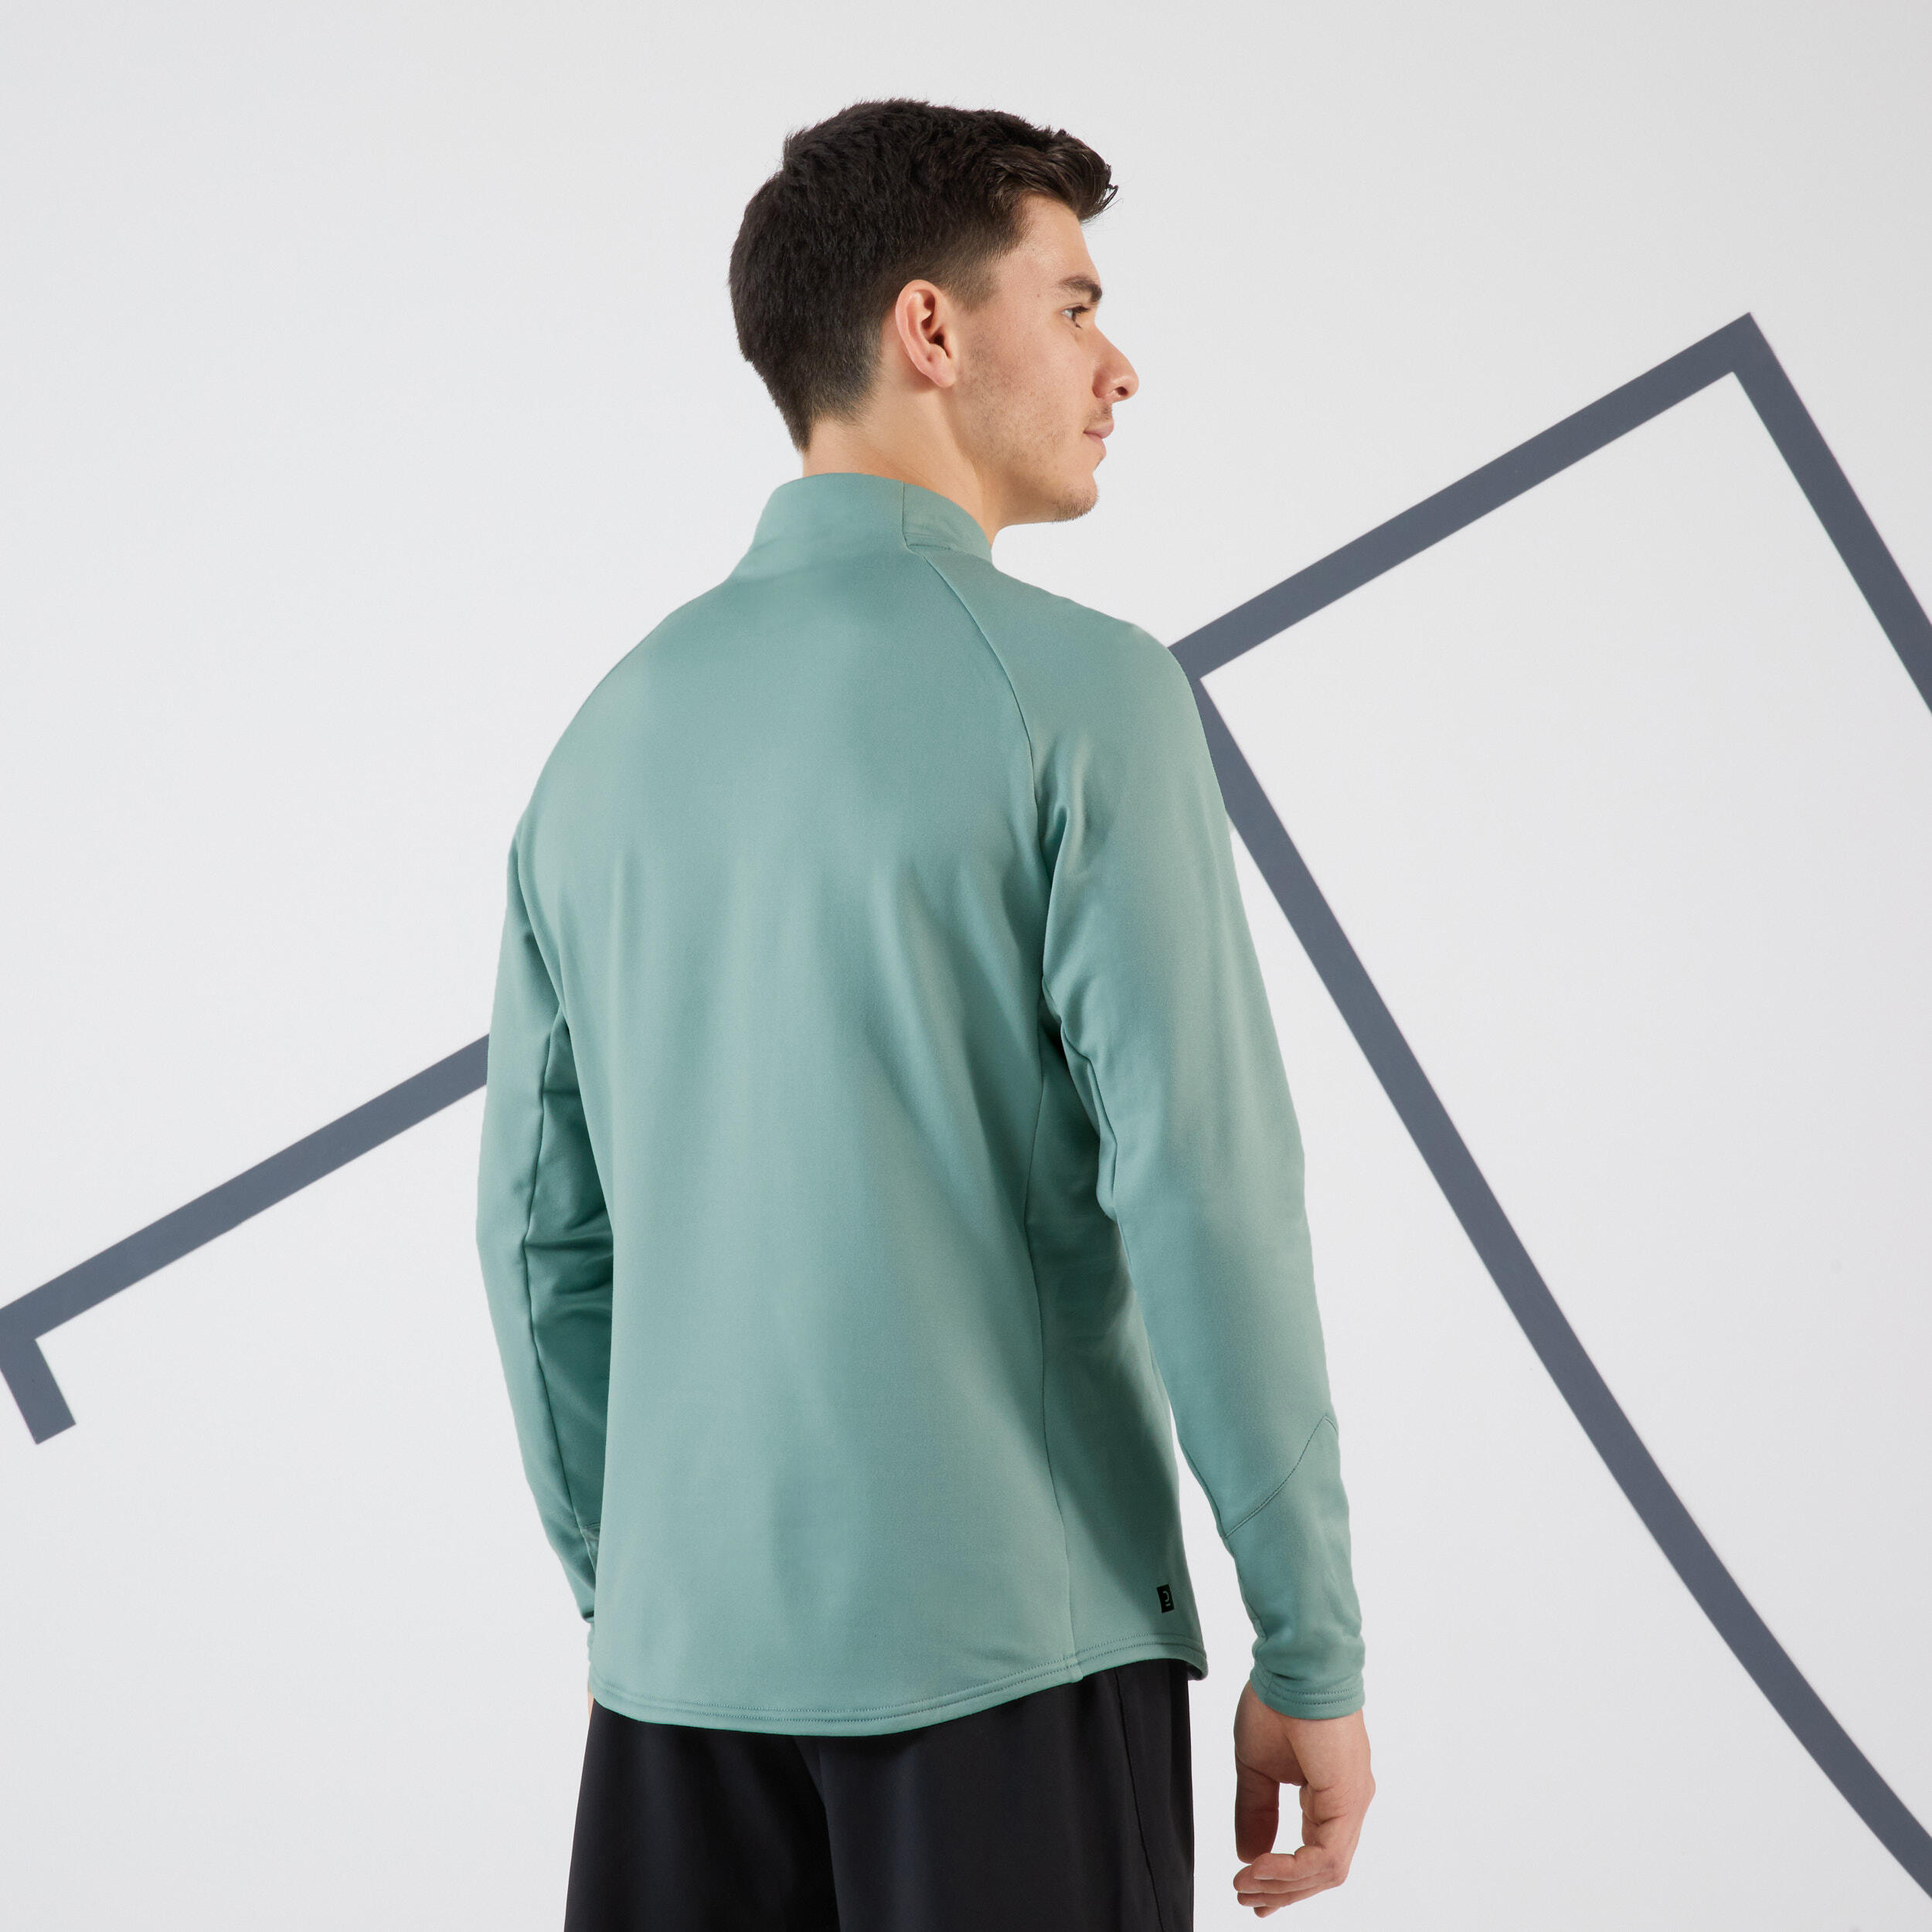 Men's Half-Zip Long-Sleeved Thermal Tennis Sweatshirt - Verdigris 2/6